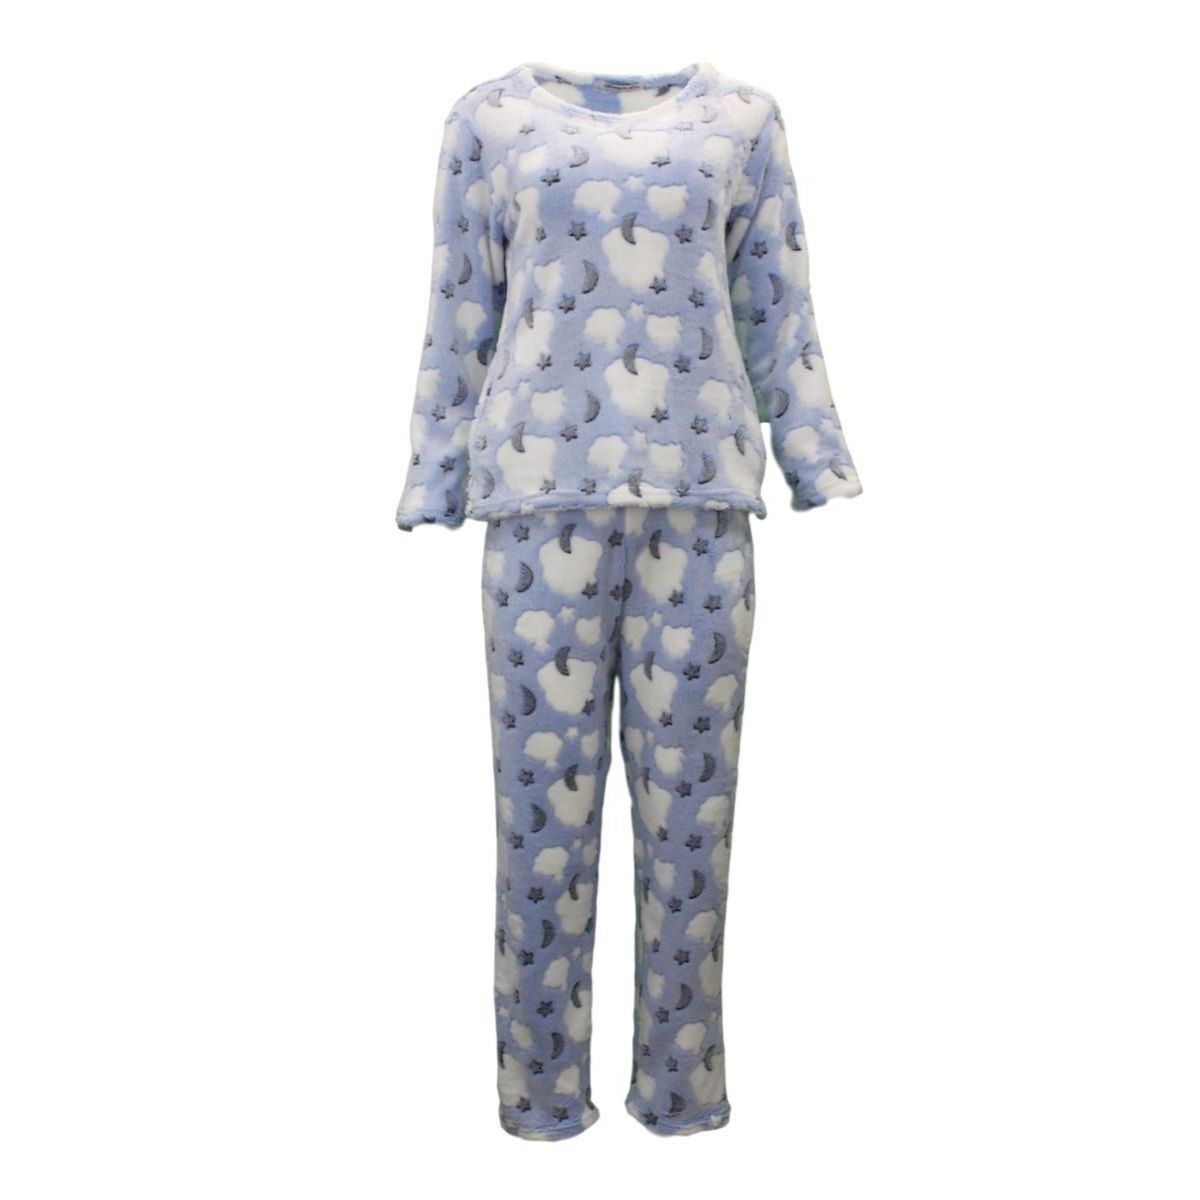 Women's Supersoft Pyjama Plush Loungewear Fleece Sleepwear Pajamas Set  Winter PJ - FIL